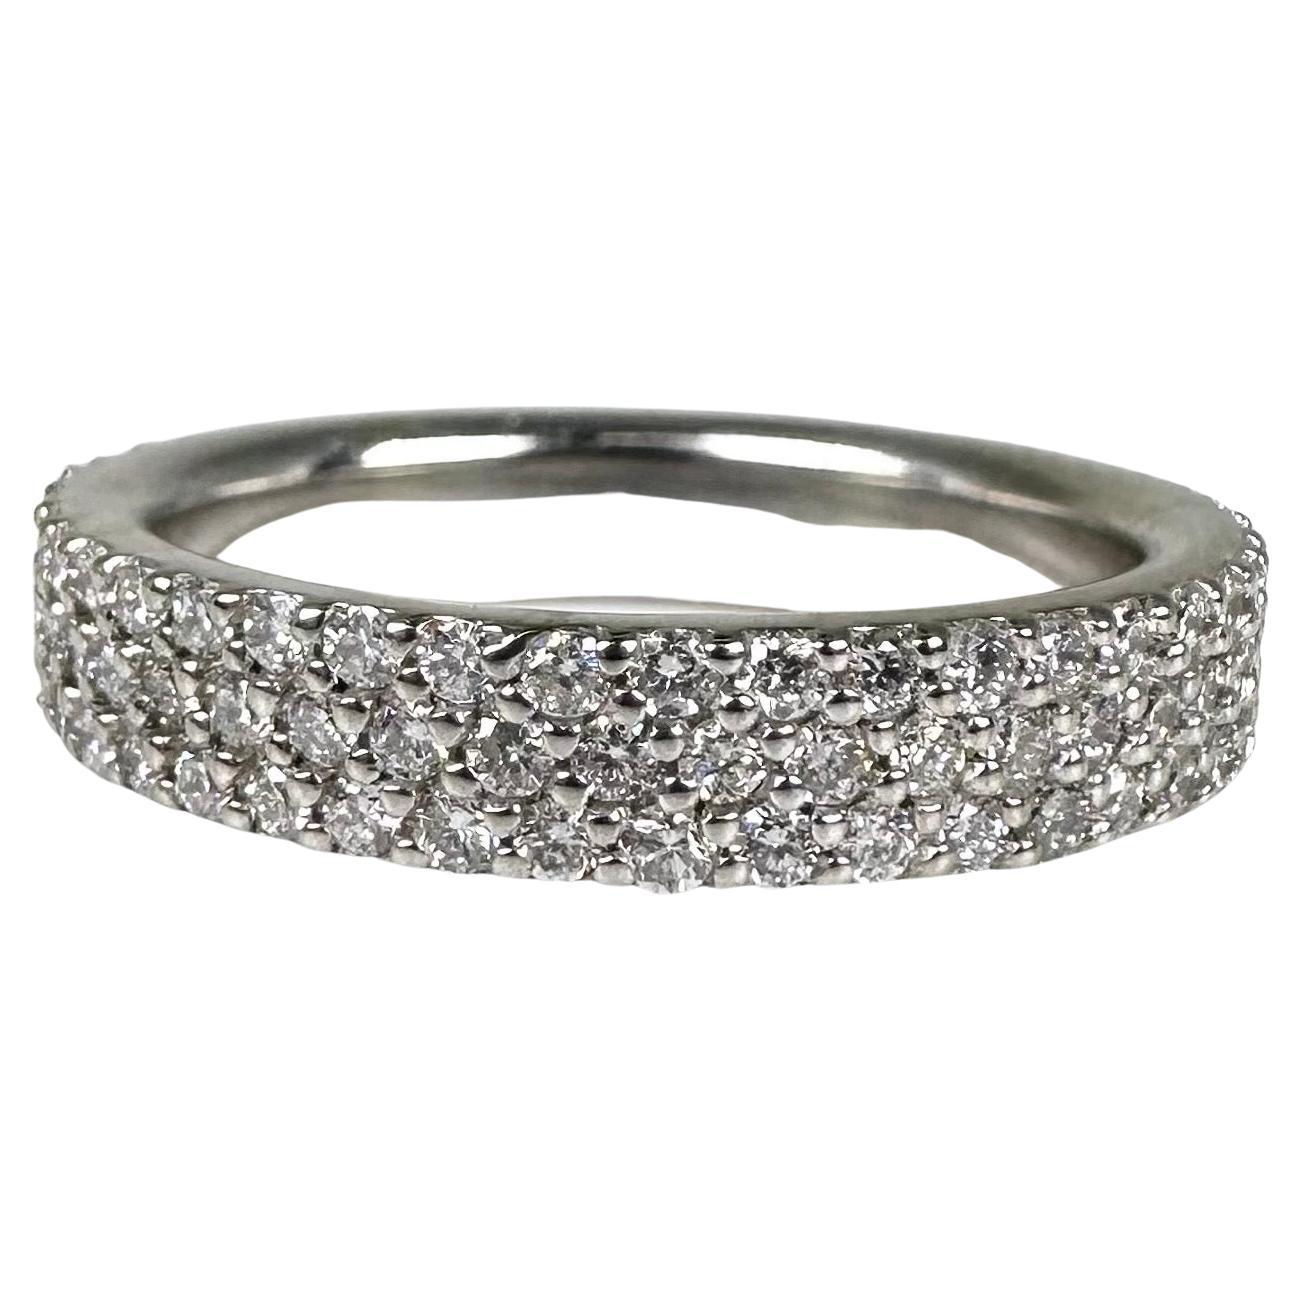 Pave set diamond wedding band 14KT gold 1.26ct diamond ring